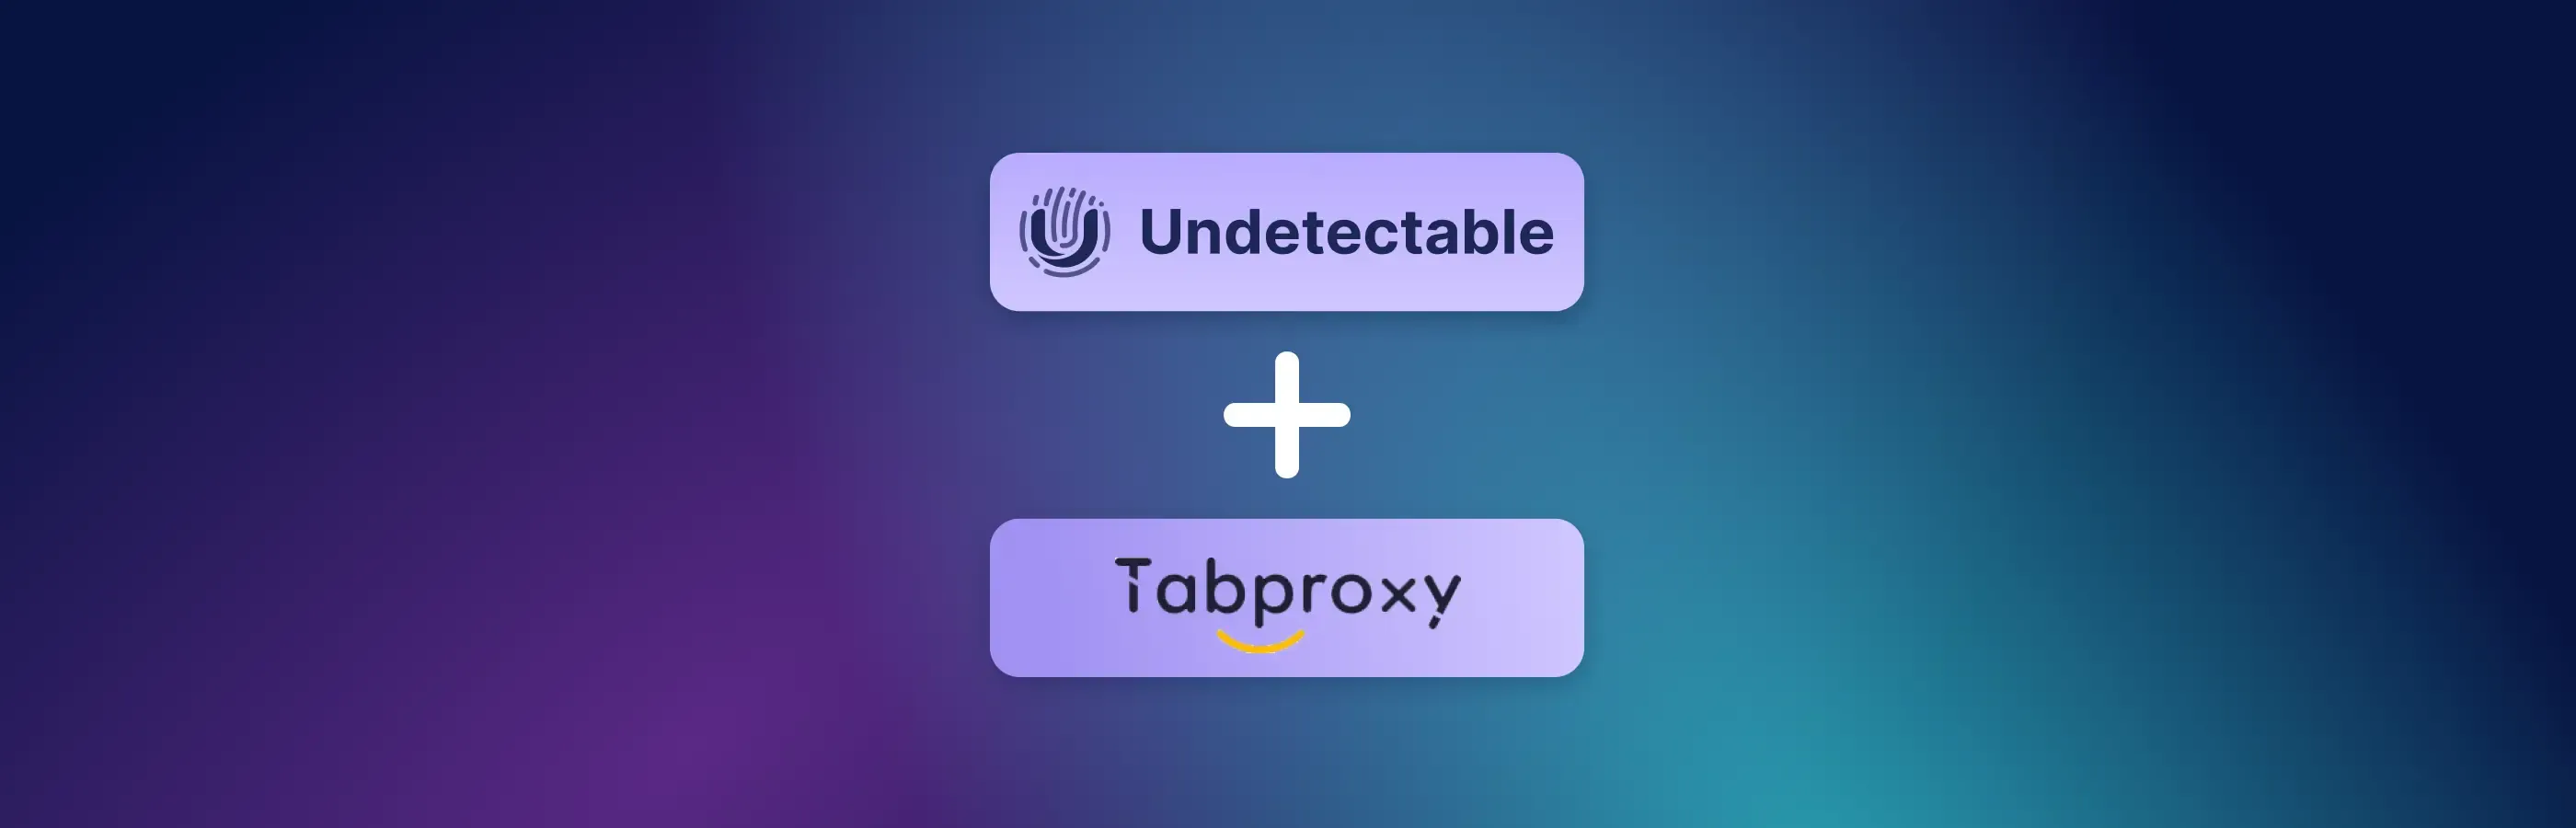 Undetectable no TabProxy